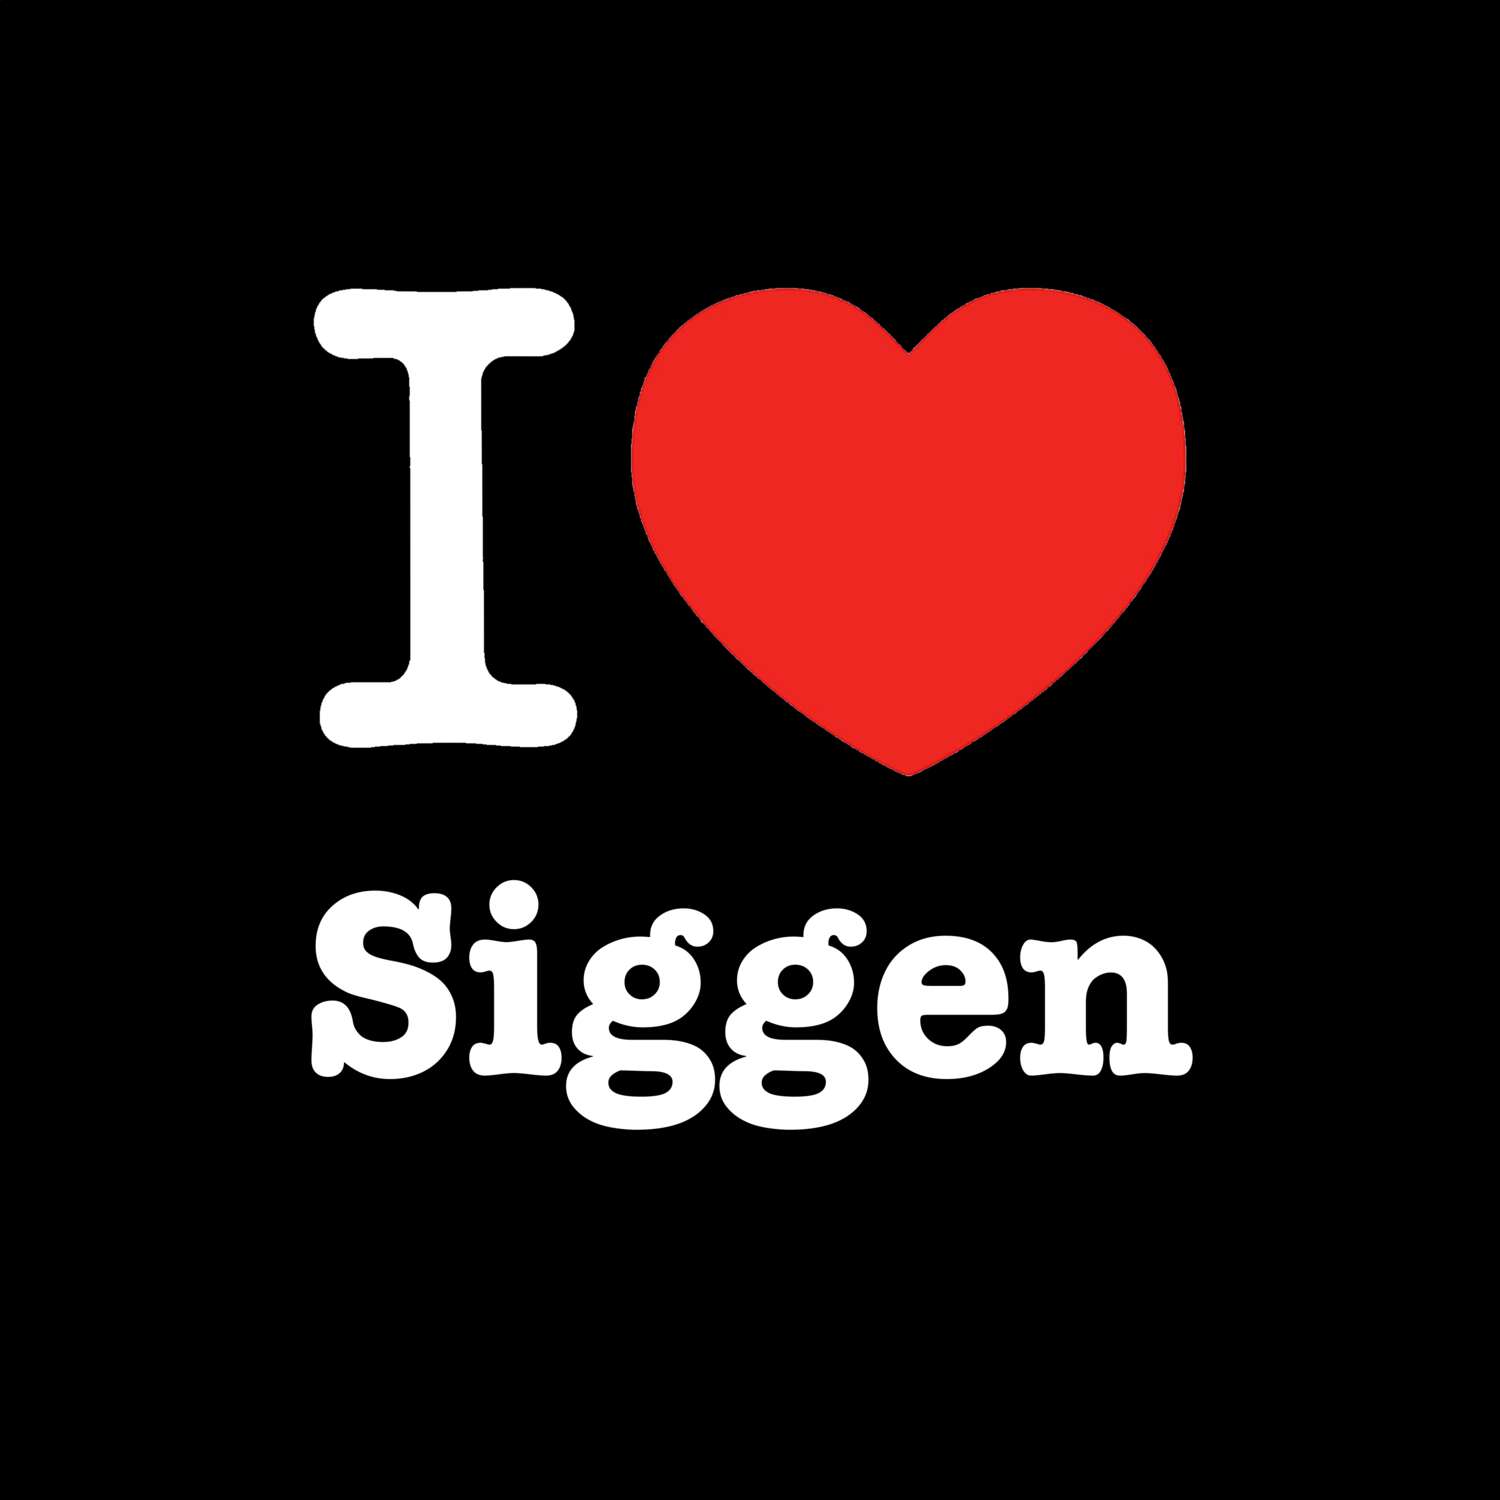 Siggen T-Shirt »I love«